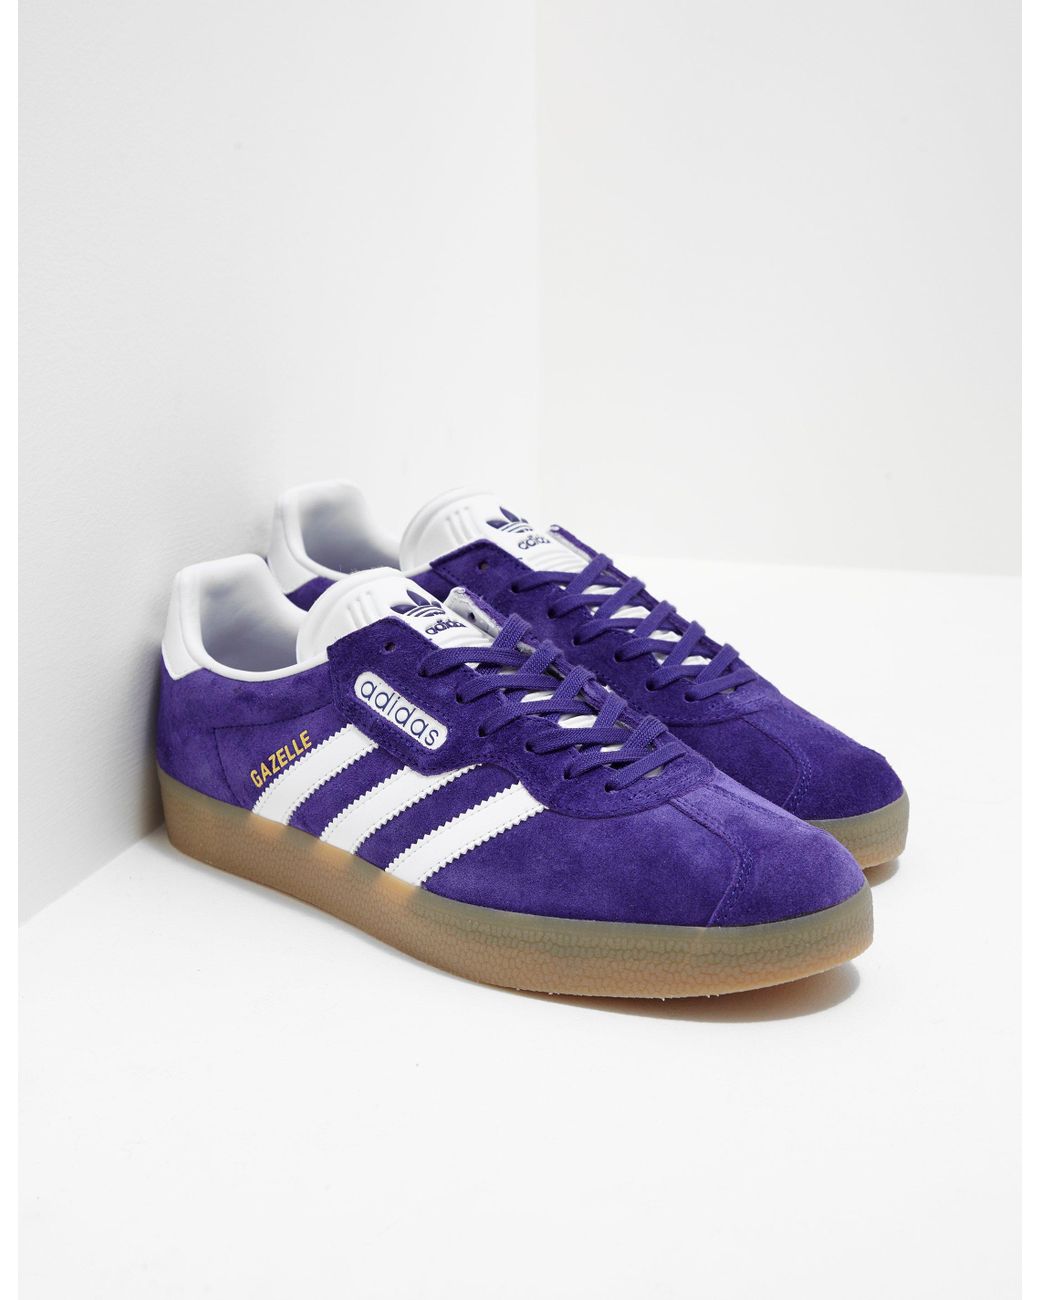 adidas Originals Mens Gazelle Super Purple for Men | Lyst